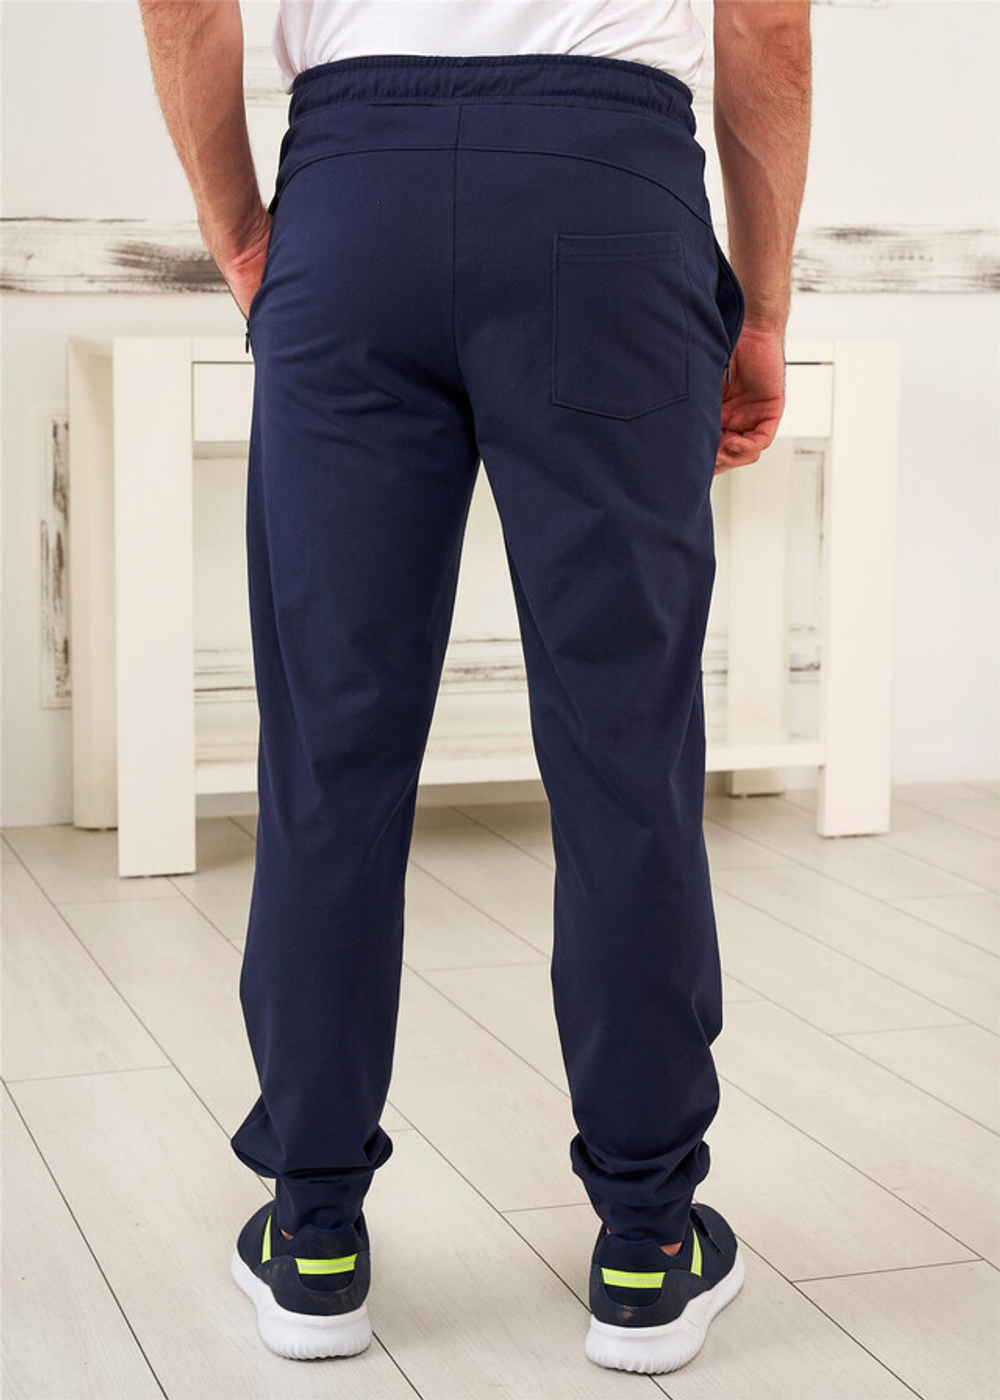 RELAX MODE / Спортивные штаны мужские брюки спортивные мужские треники - 40089